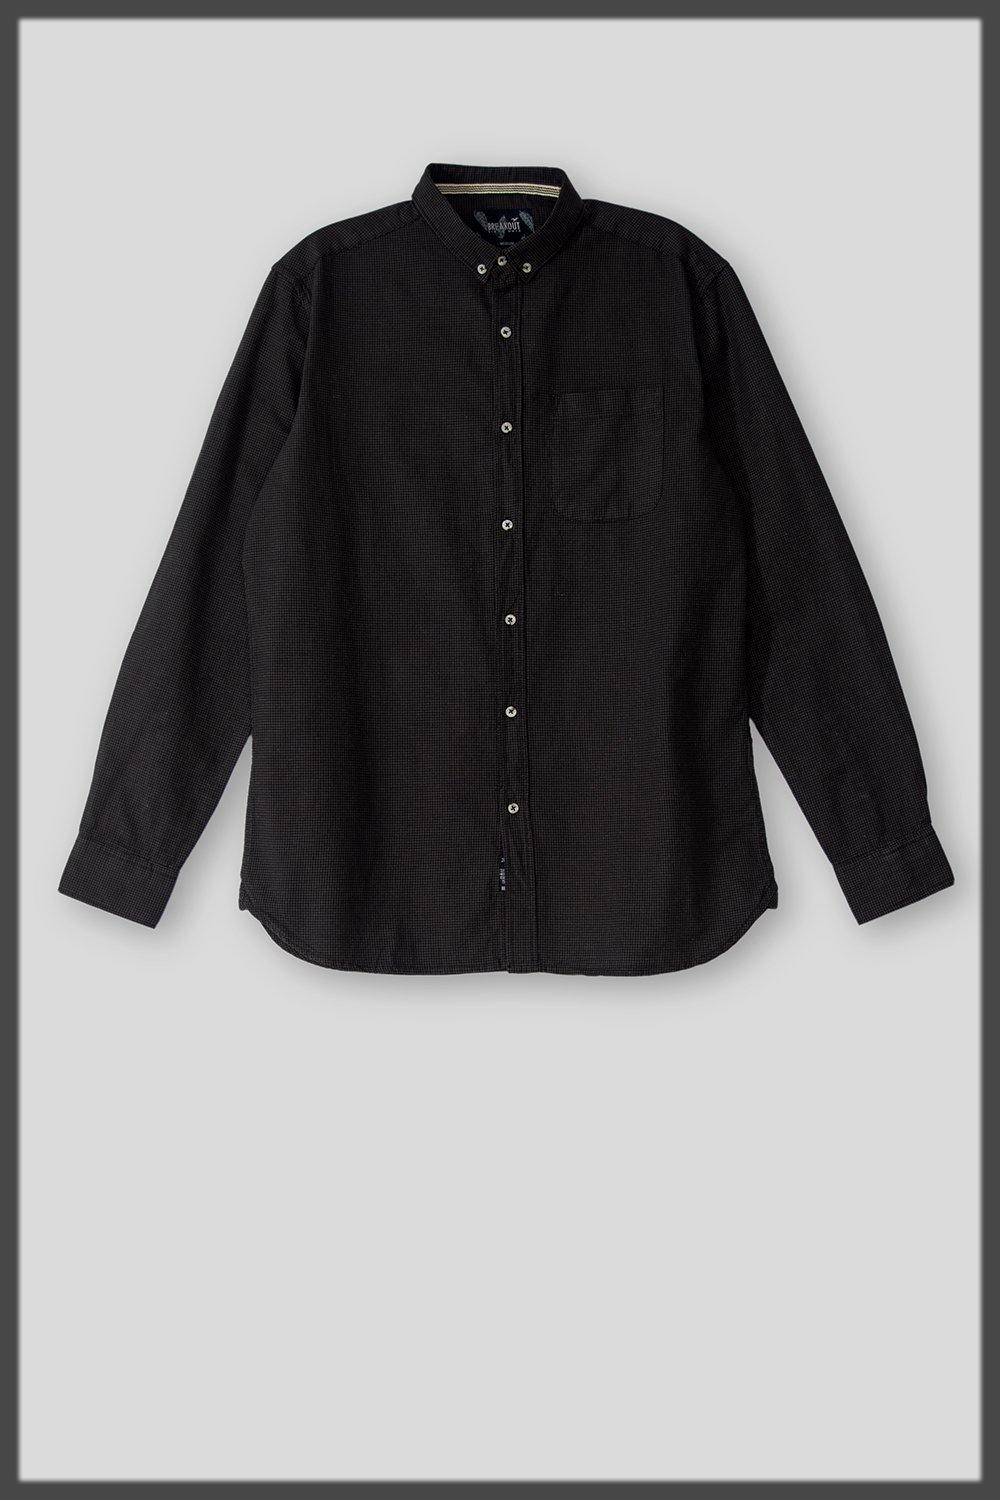 sleek black winter shirt